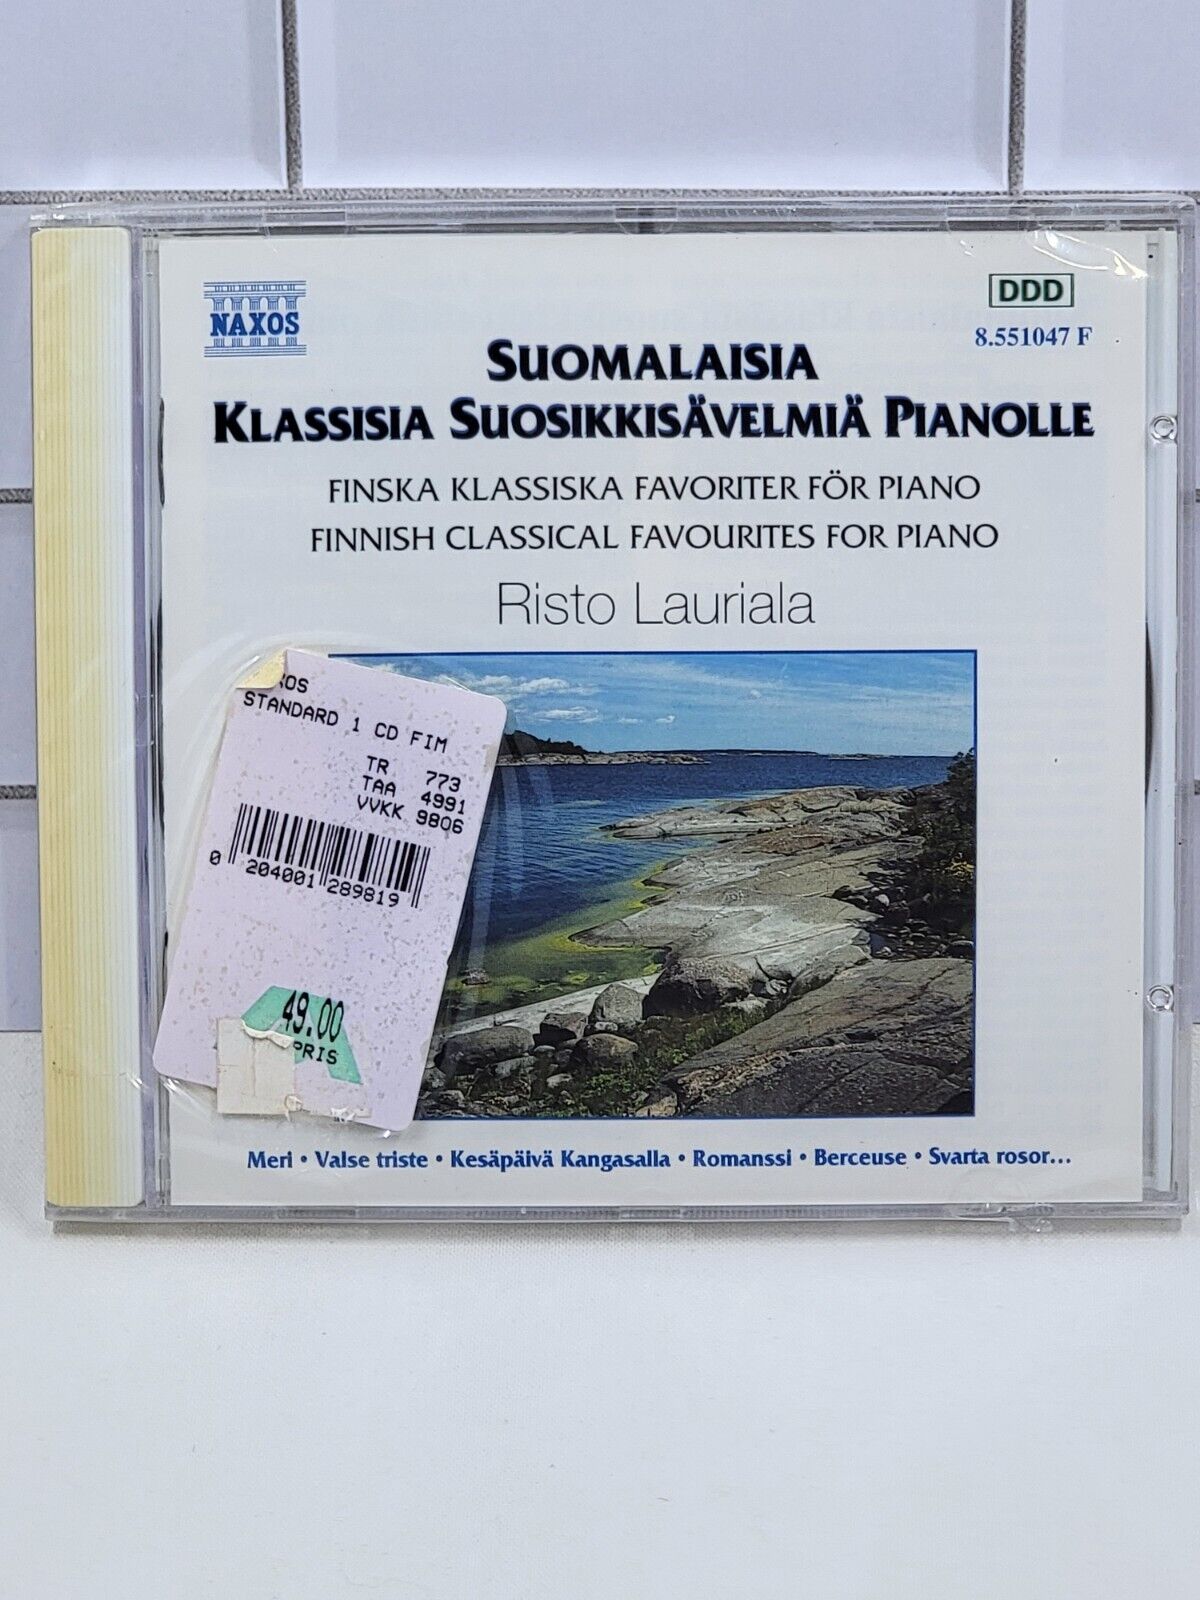 Finnish Classical Music Suomalaisia Klassisia Suoikkisavelmia Finland CD 1997